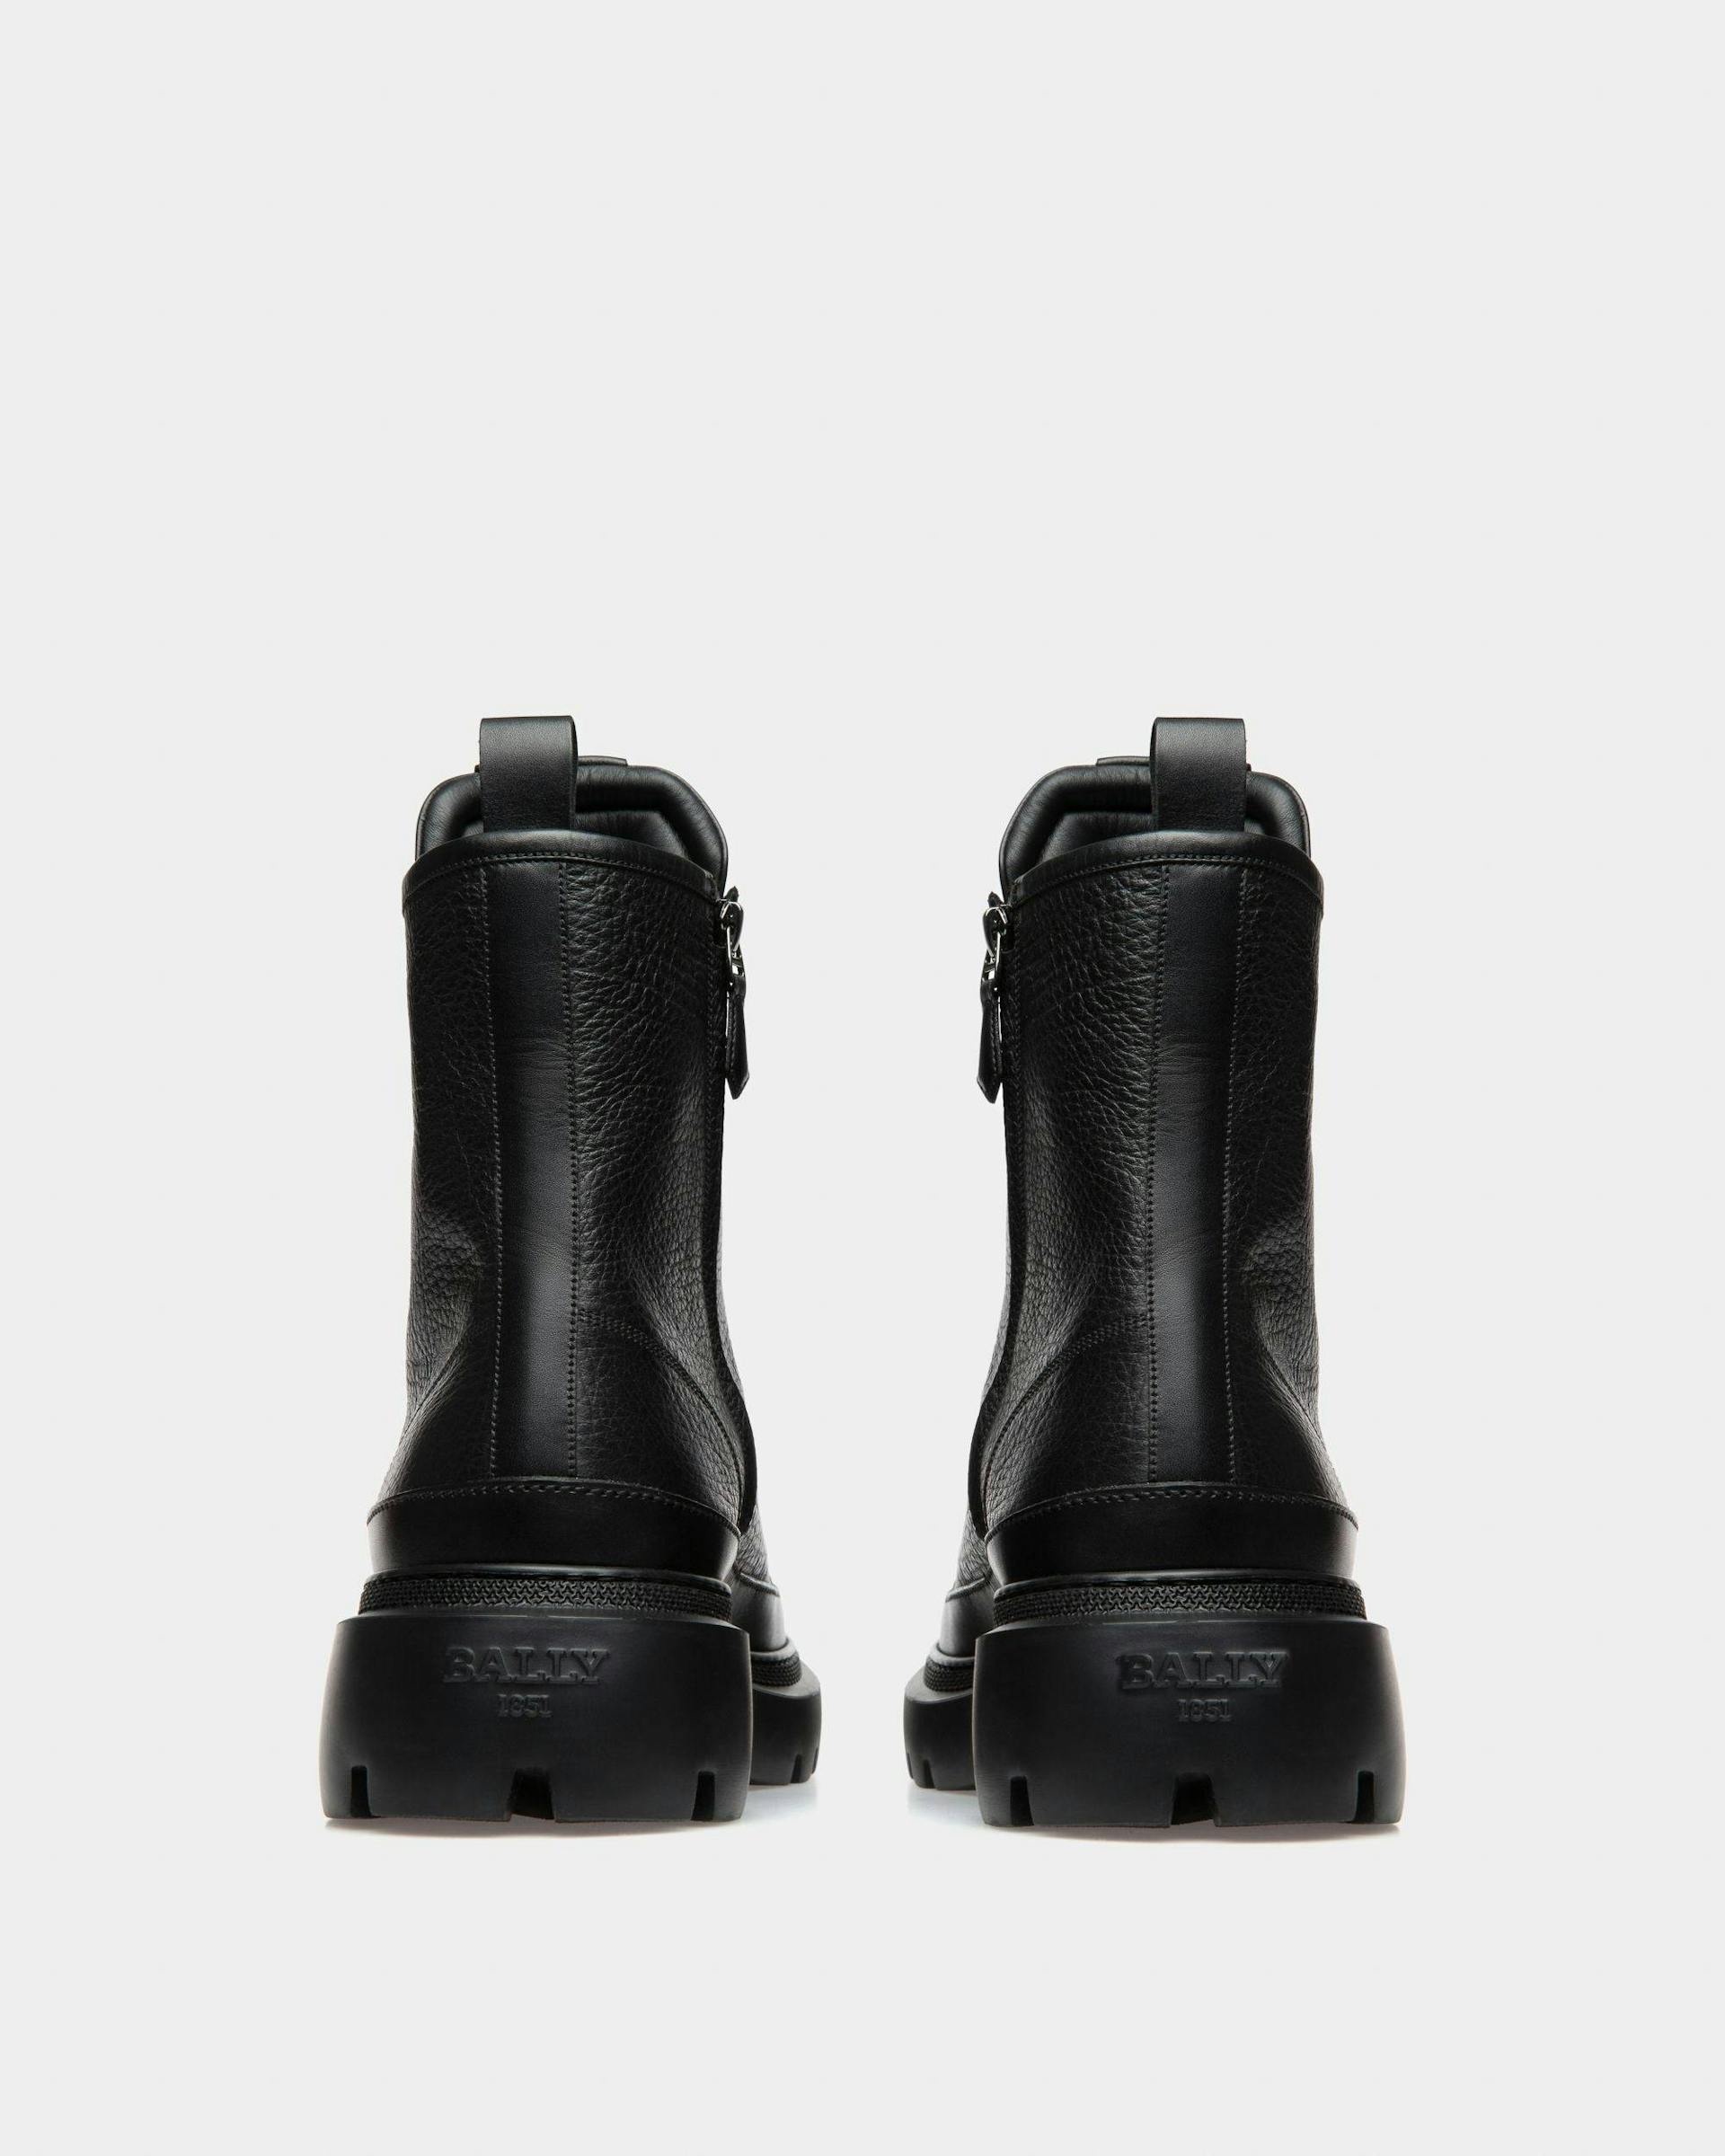 Vatiz Leather Boots In Black - Men's - Bally - 04